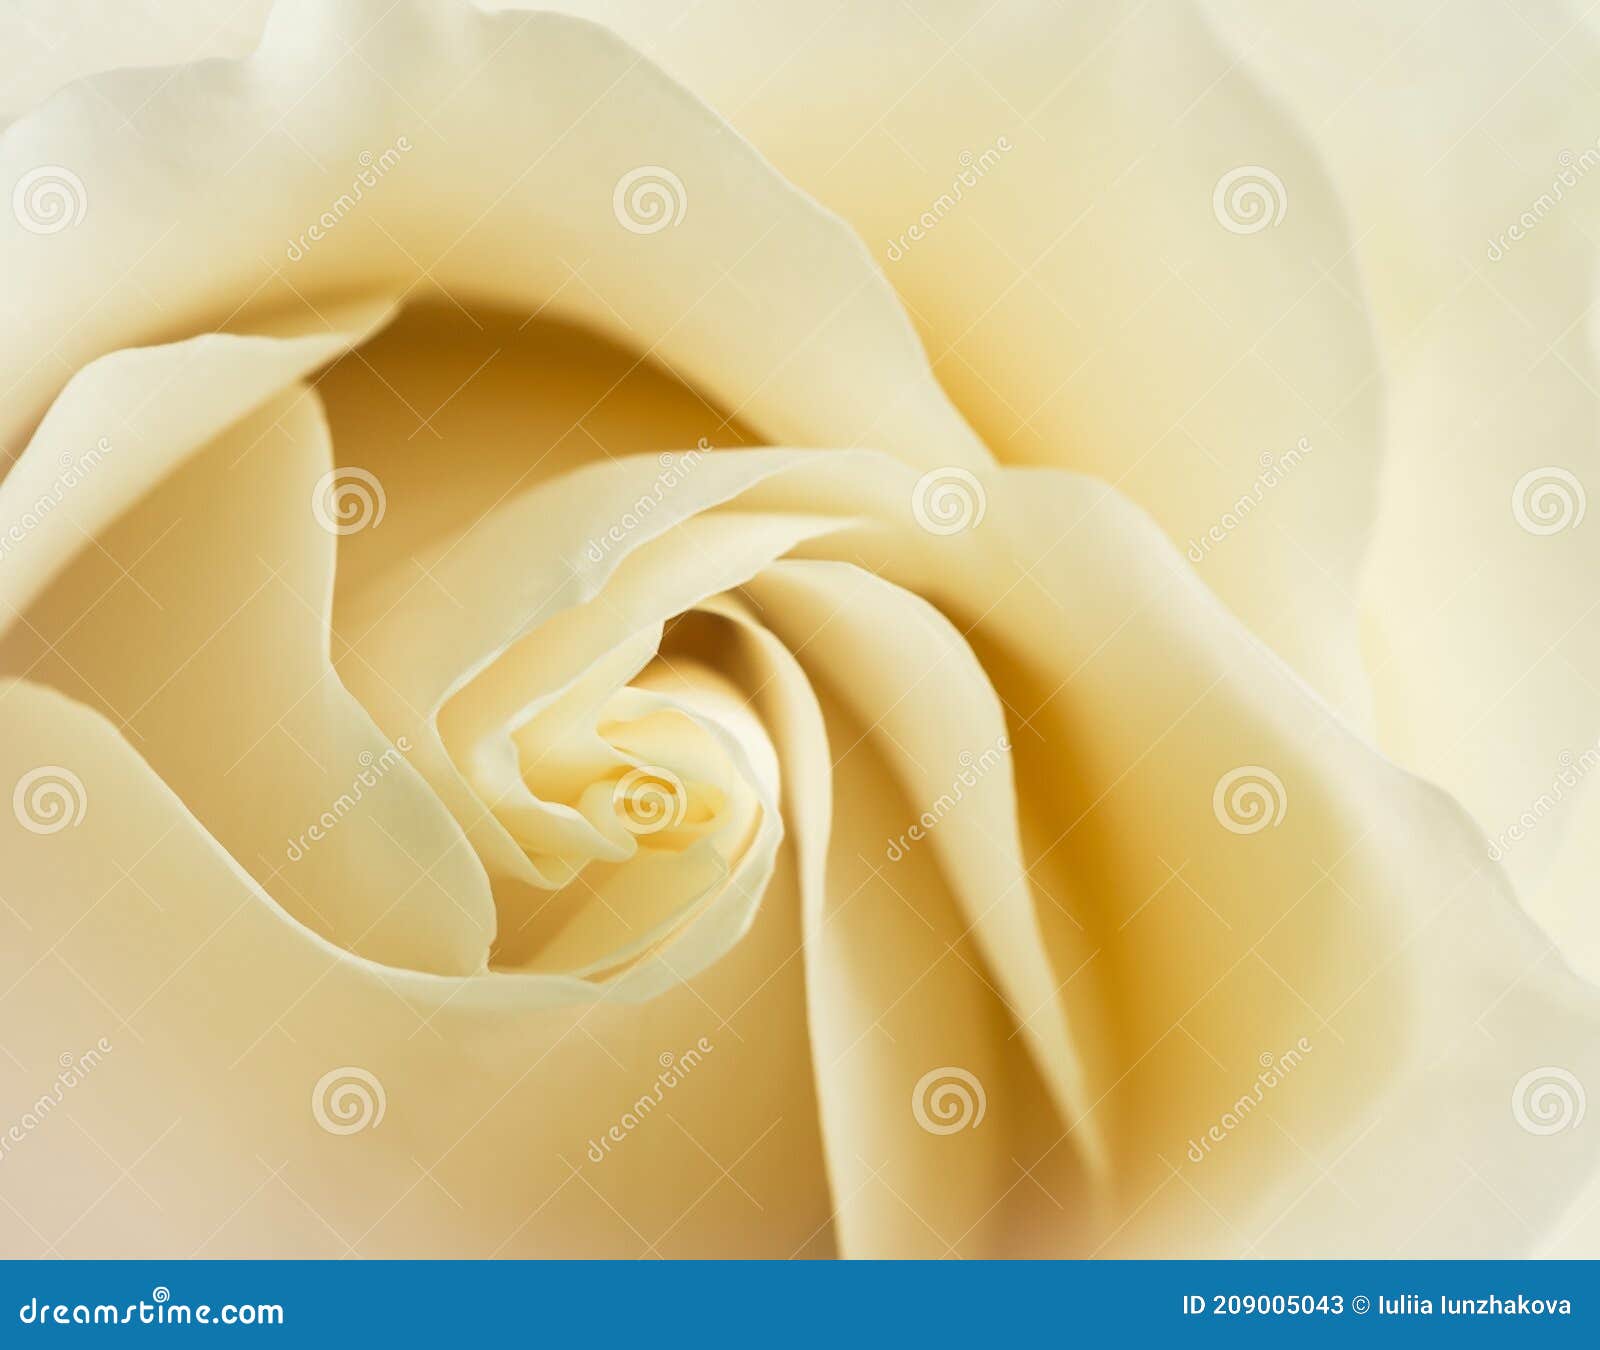 white chocolate or vendela rose petals close up with soft focus.